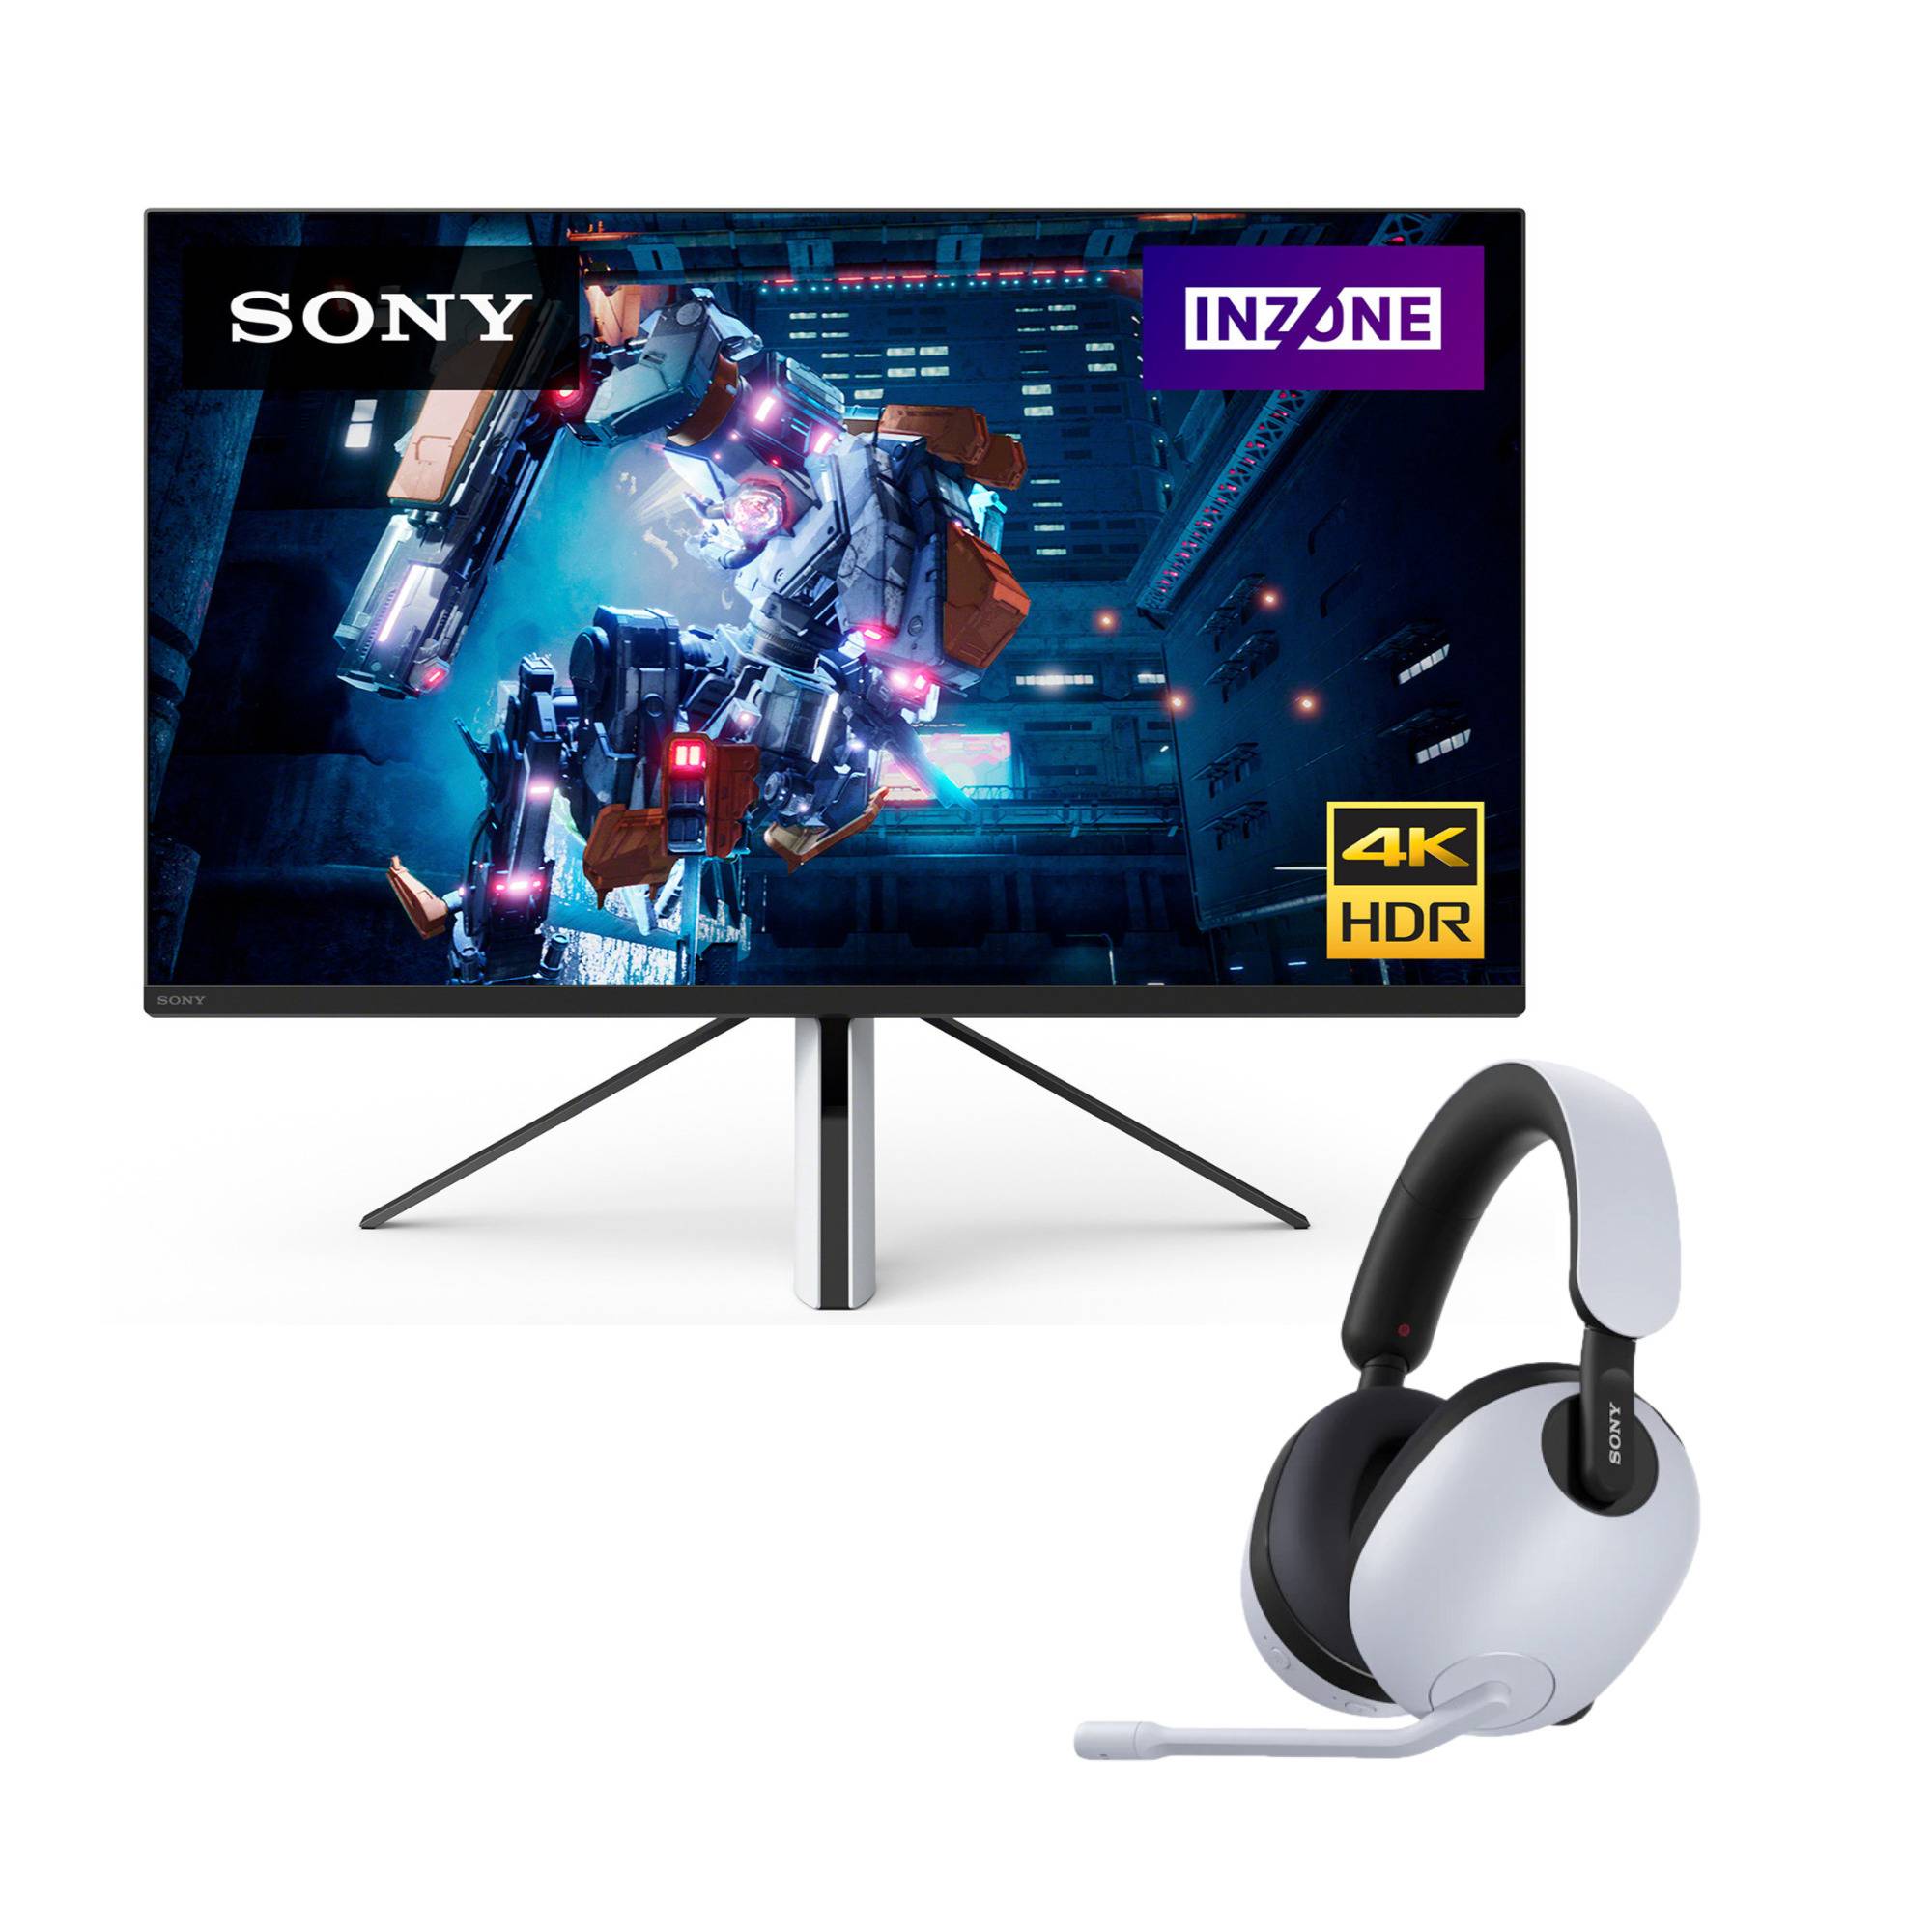 Sony 27” INZONE M9 4K HDR 144Hz Gaming Monitor (SDM-U27M90) Bundle with H7 Wireless Gaming Headset